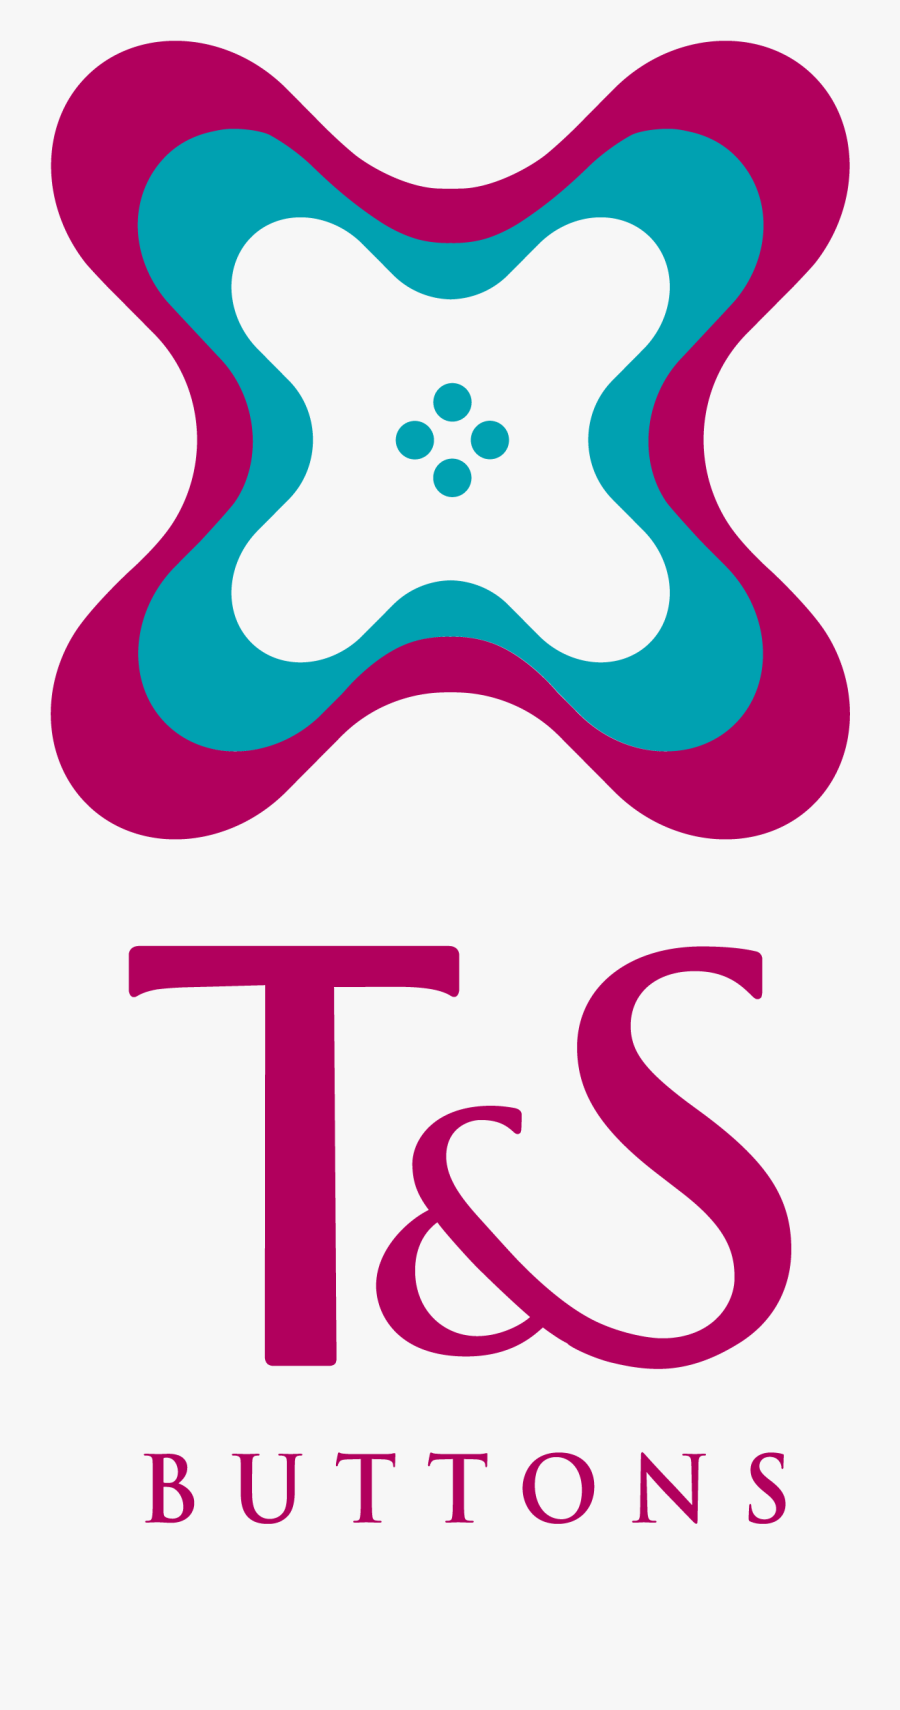 T&s Button Lanka Logo - T&s Buttons Lanka, Transparent Clipart